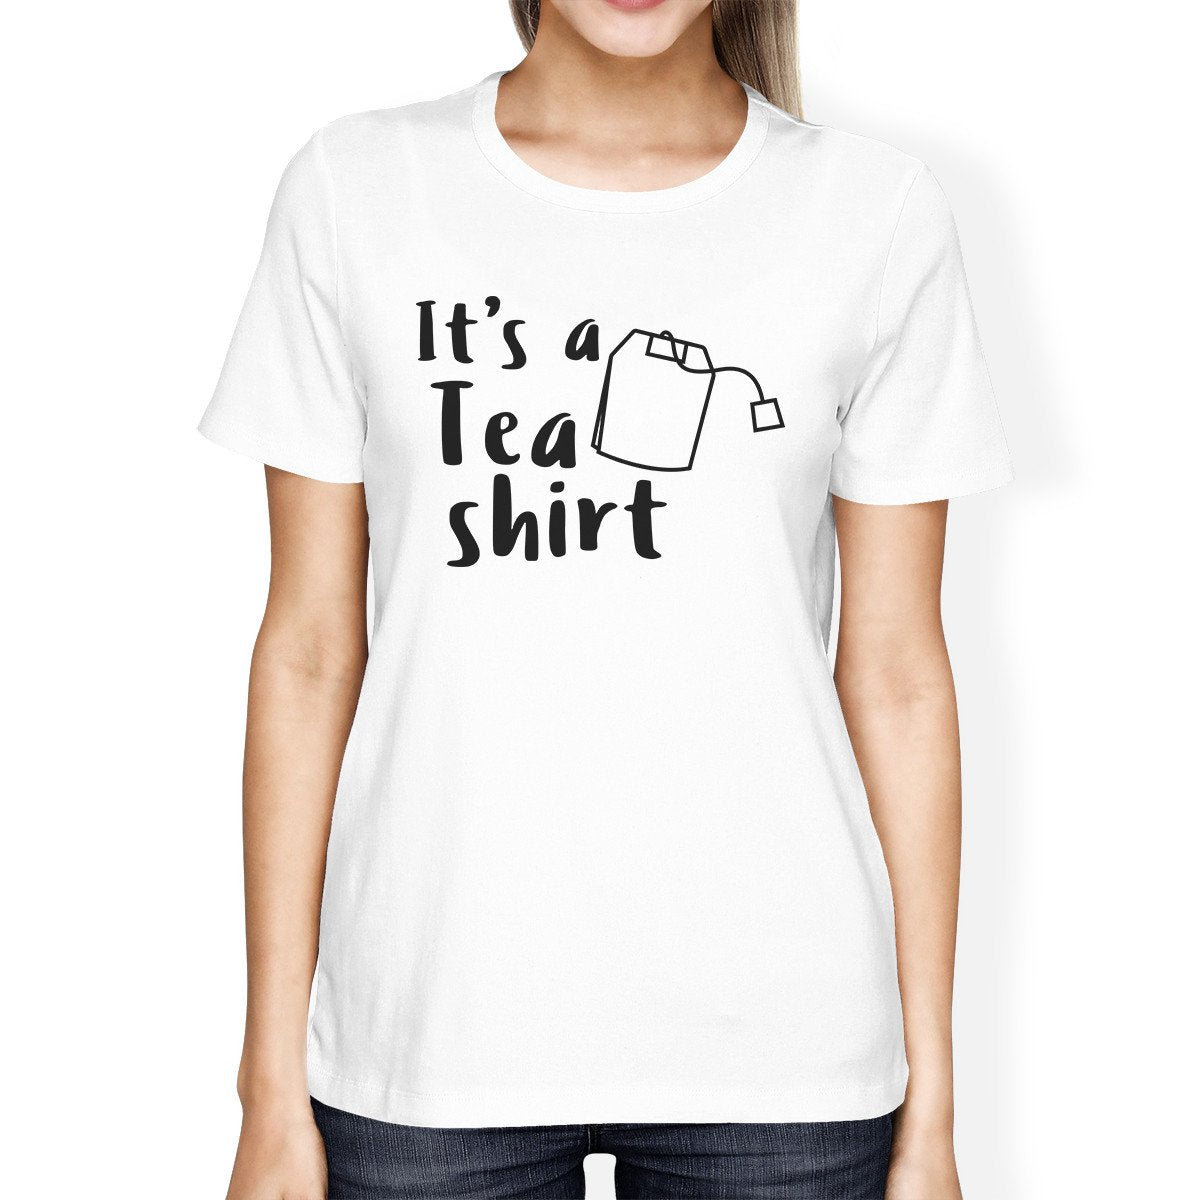 It's A Tea Shirt Women's White Cute T-Shirt Funny Graphic Top